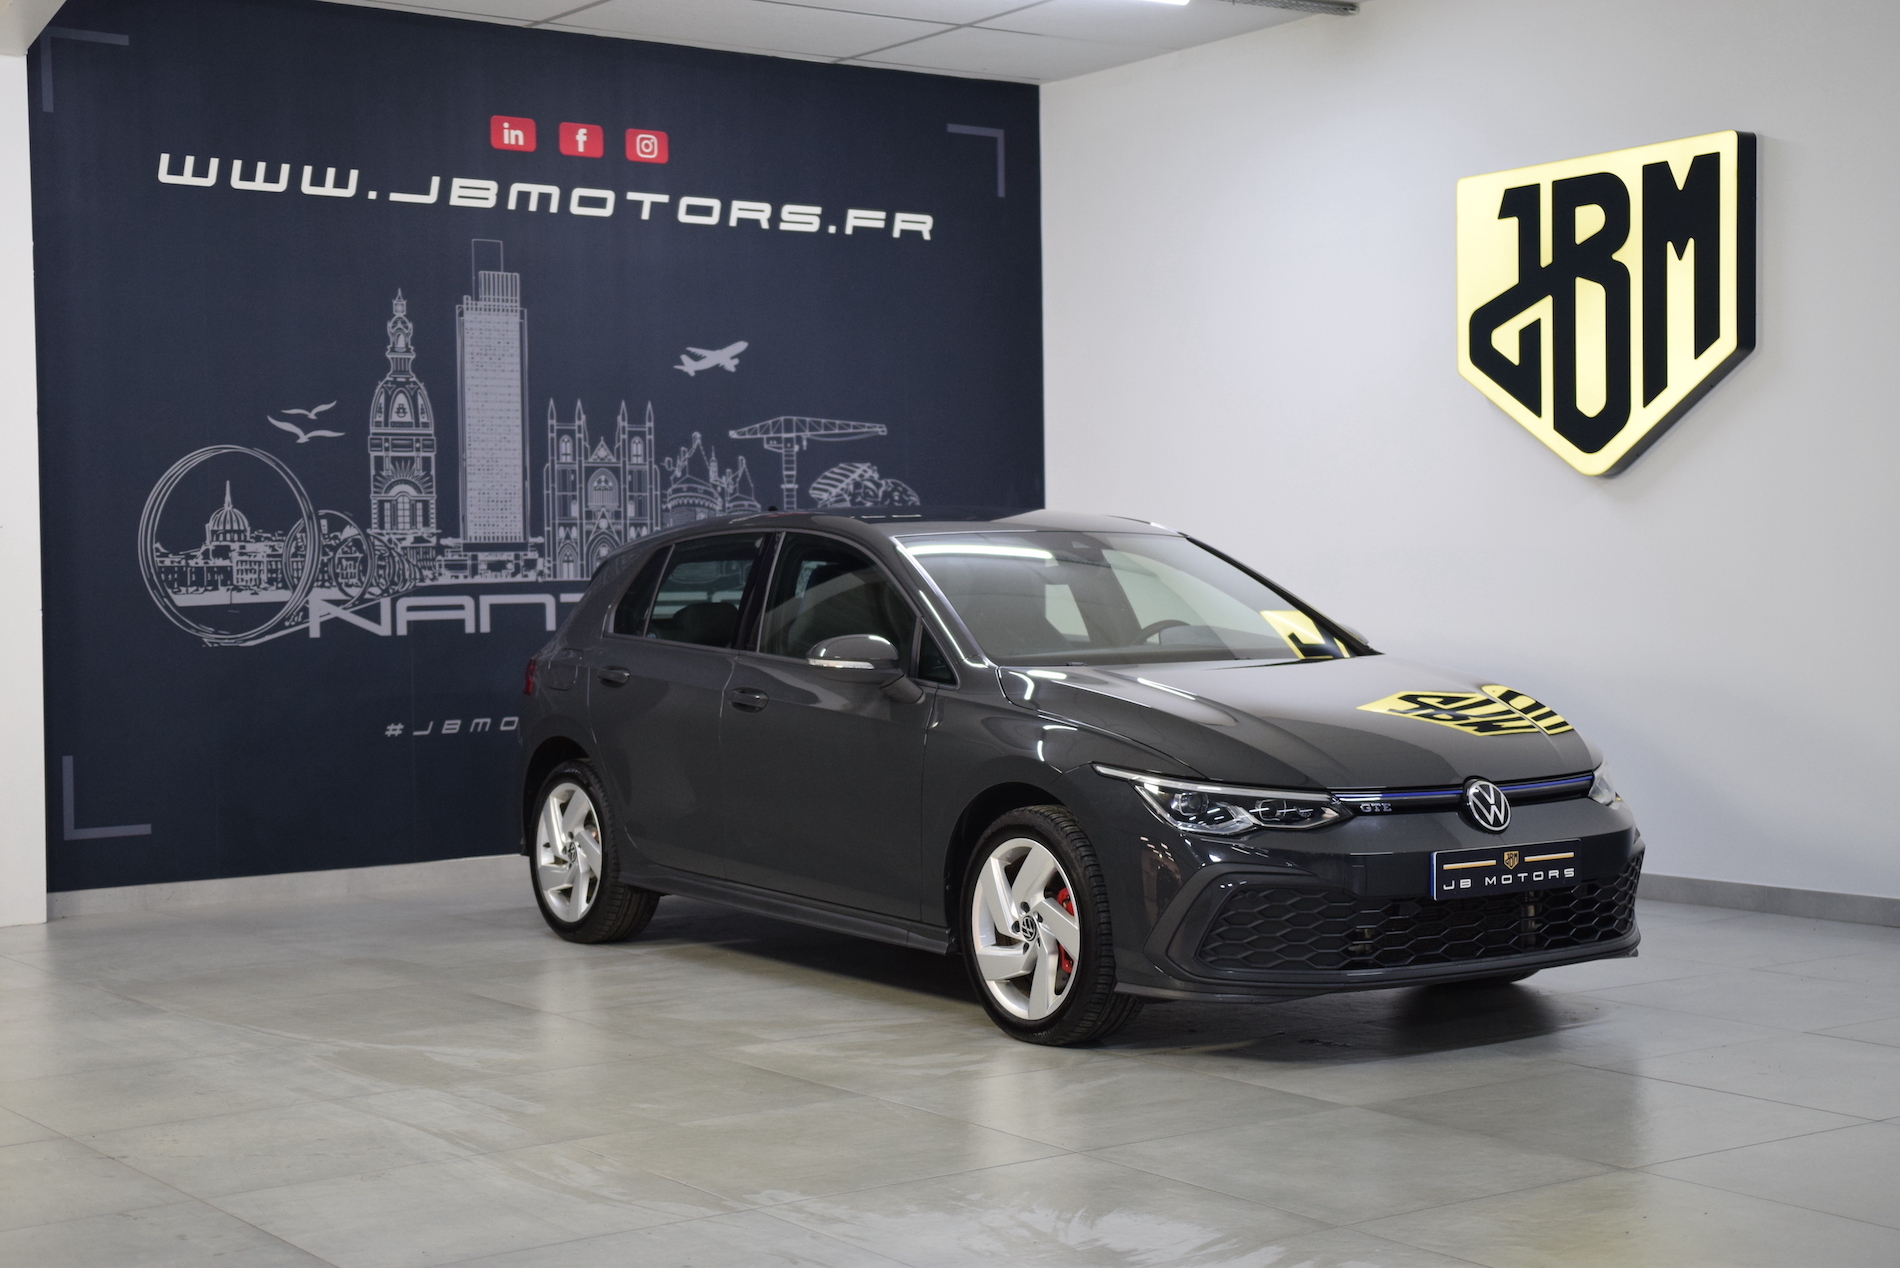 10 -  Volkswagen GOLF GTE d'occasion disponible chez JB MOTORS NANTES - .JPG